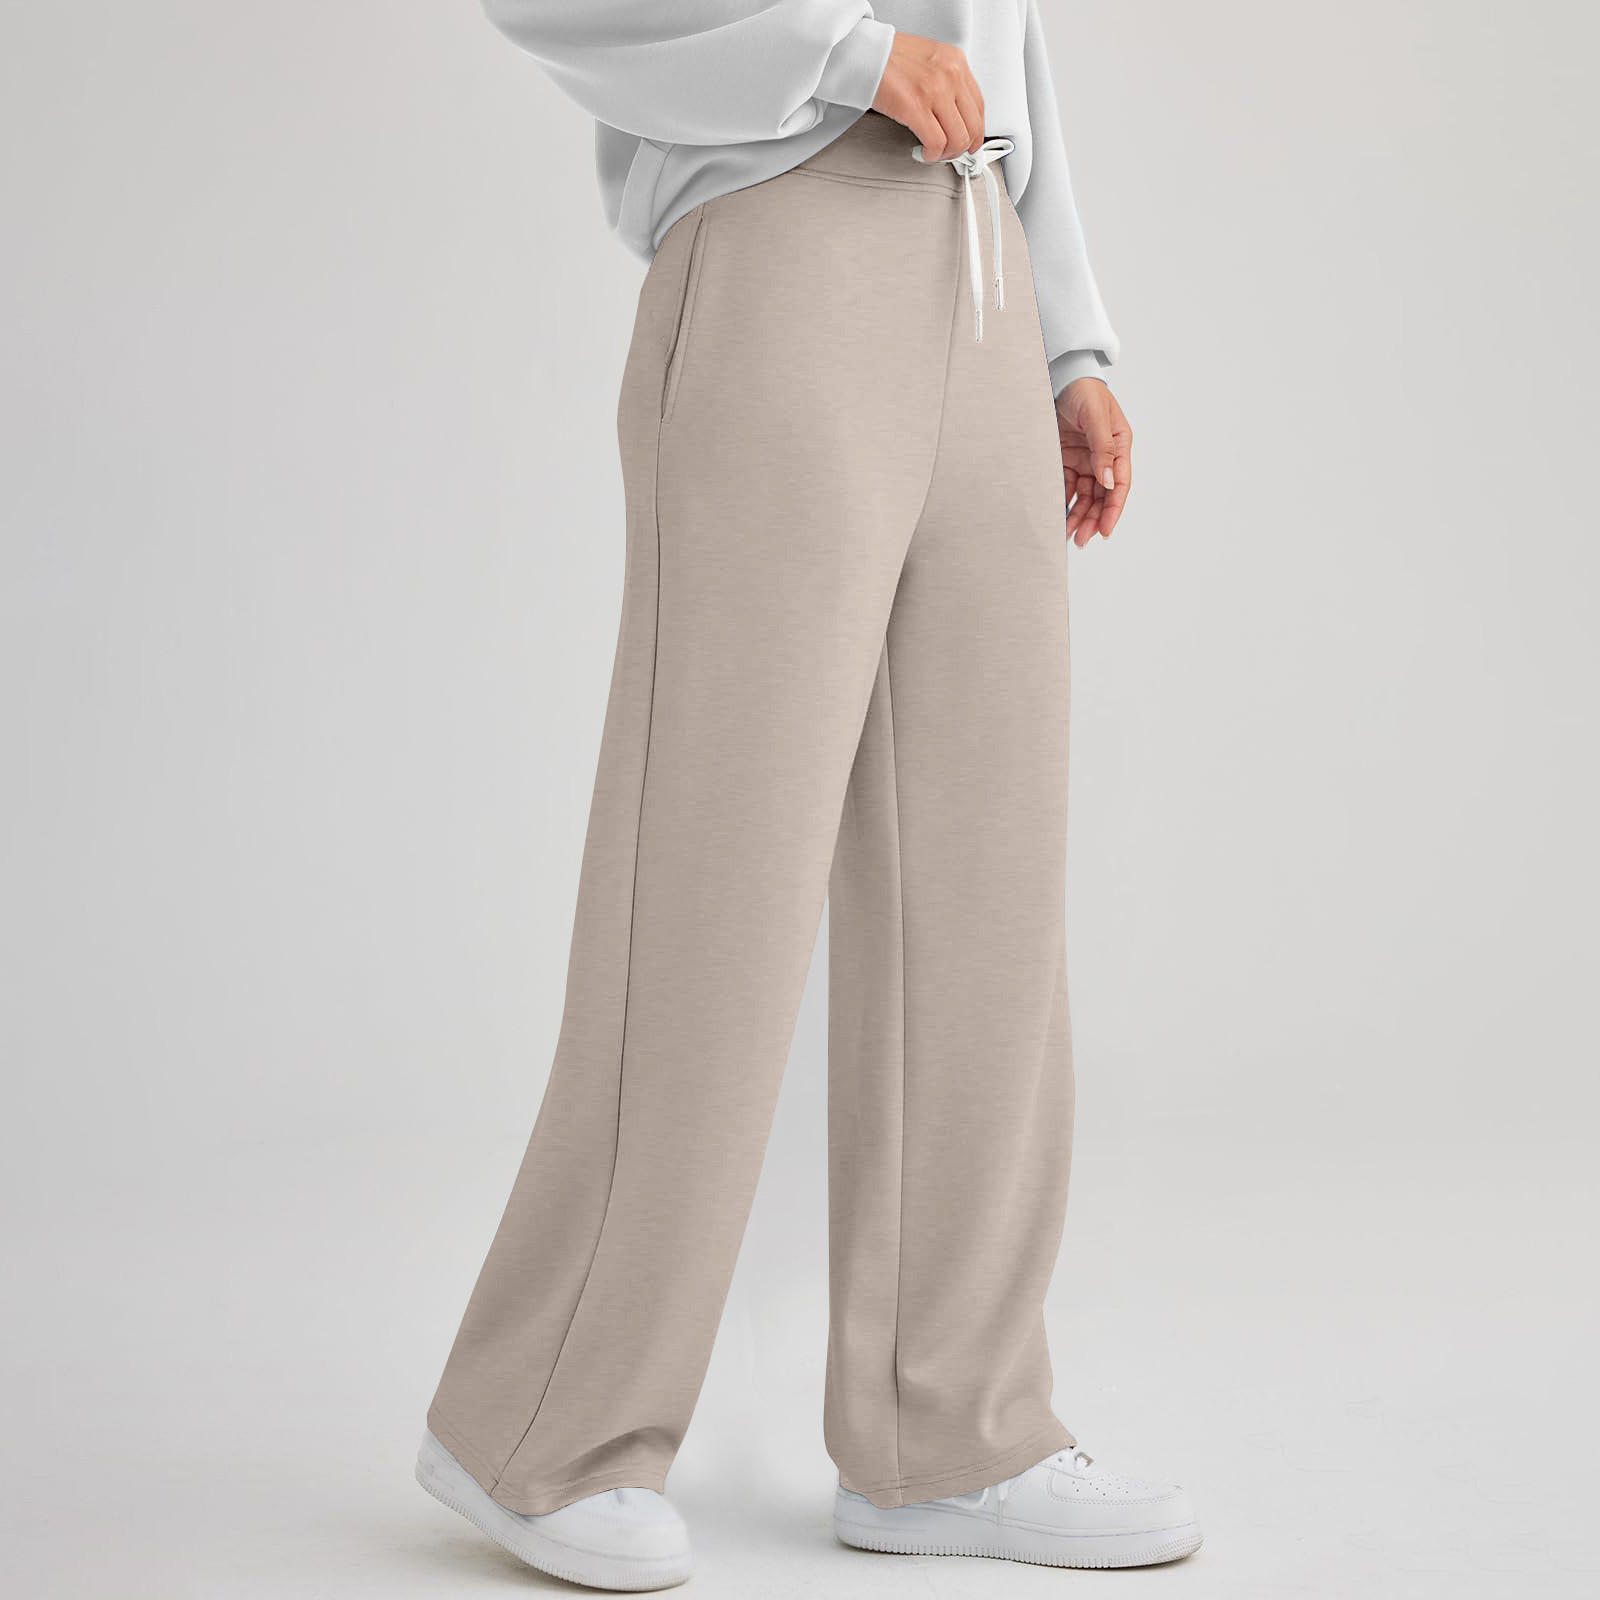 LTTVQM Yoga Pants for Women Lounge Baggy Cinch Bottom Sweatpants ...